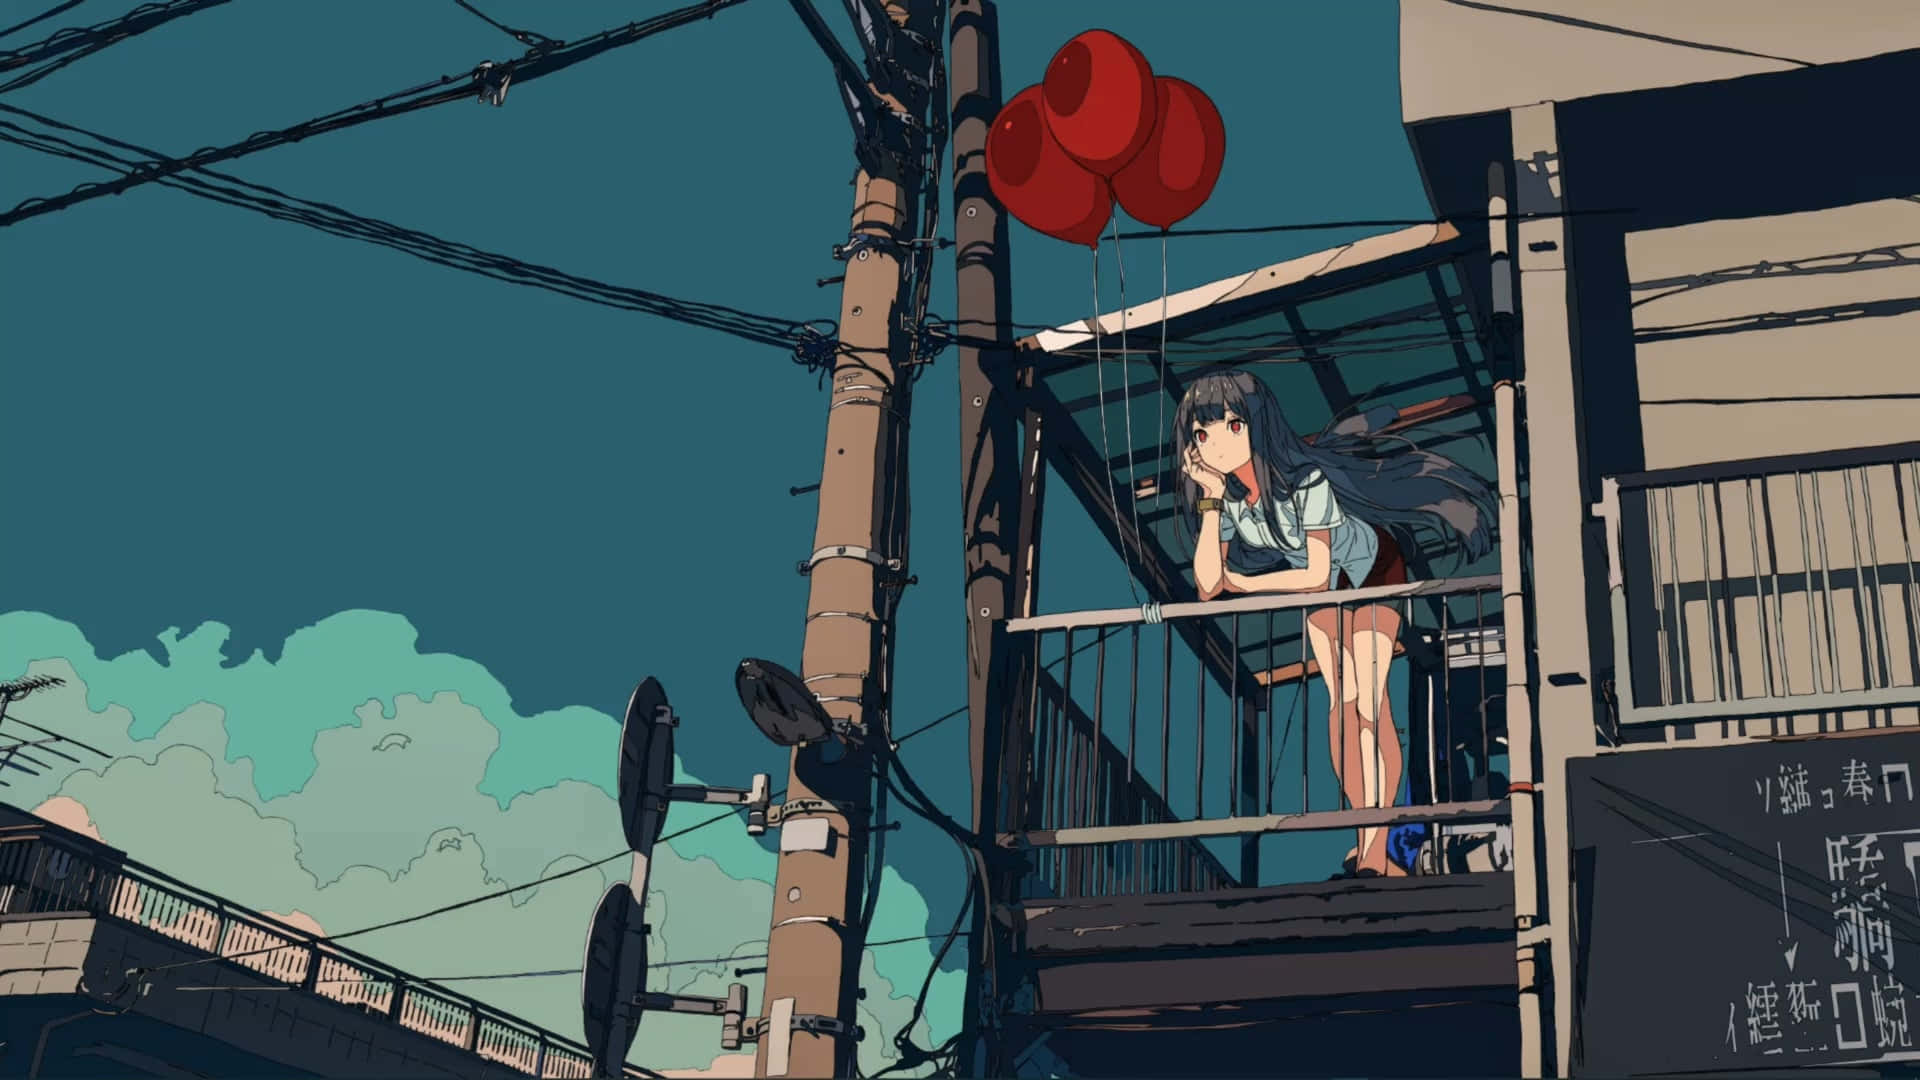 Chicade Anime Lo Fi Con Globos Rojos En El Balcón Fondo de pantalla